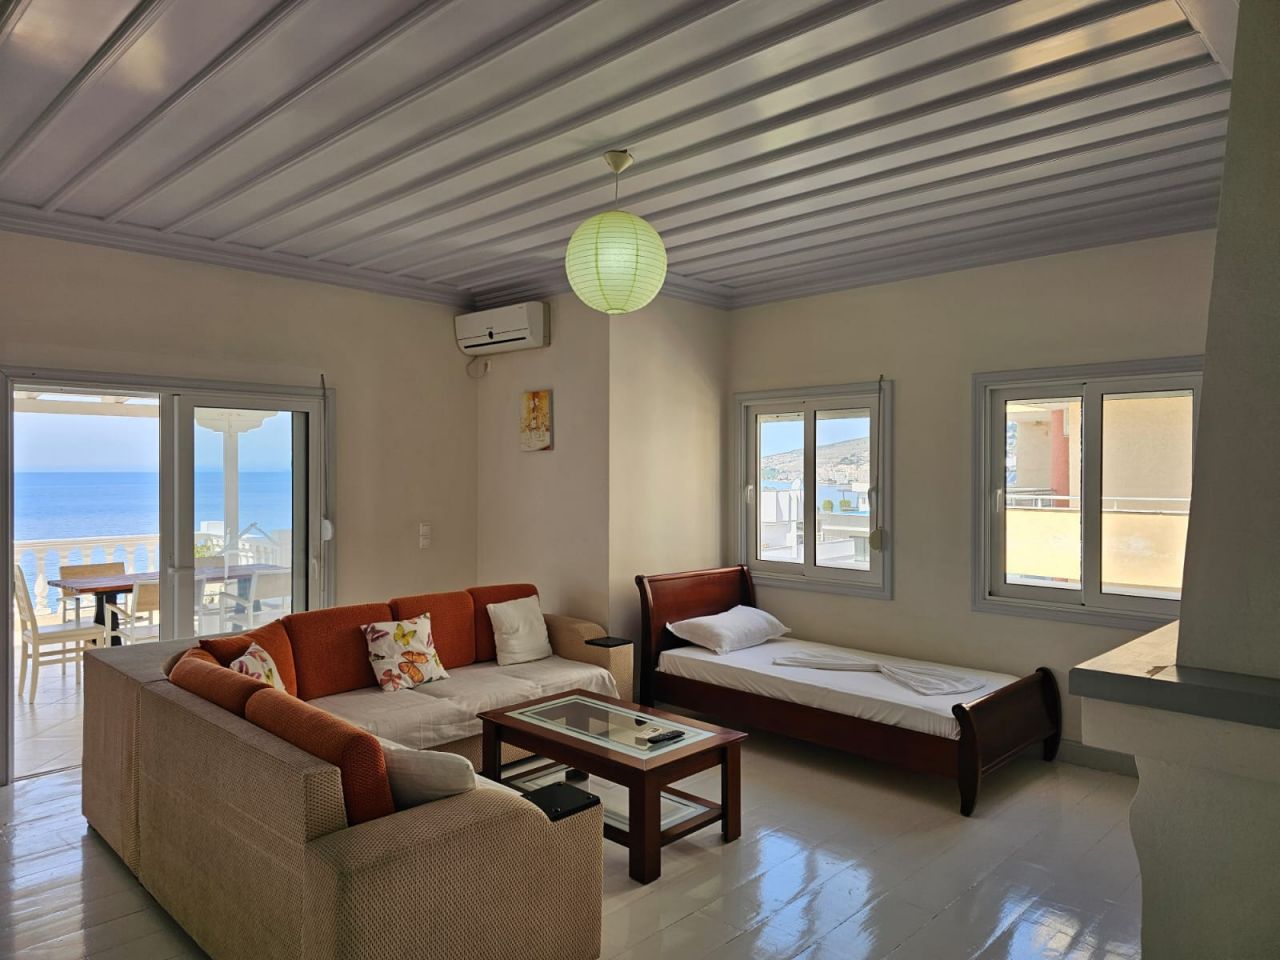 Rent Penthouse Apartment In Saranda Albania